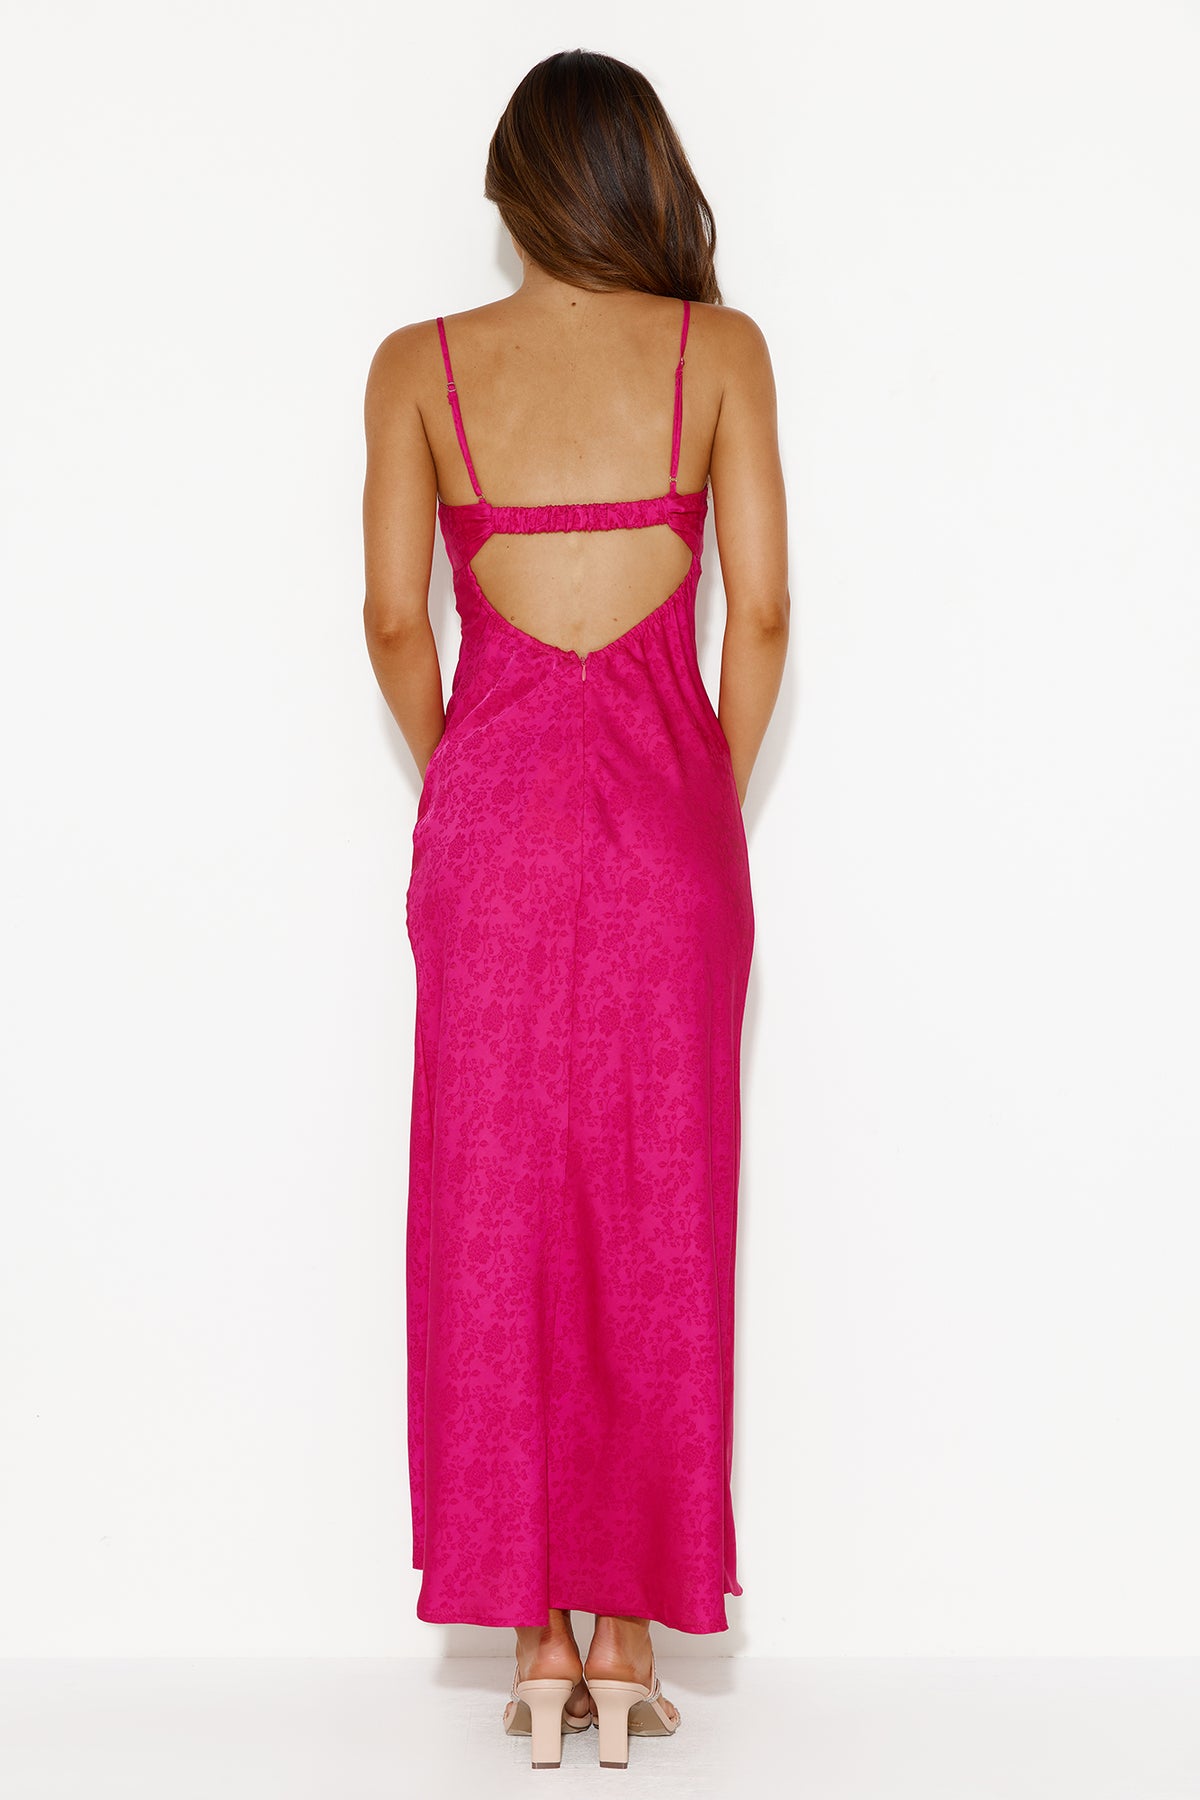 Shop Formal Dress - Ivy Forest Satin Maxi Dress Hot Pink fourth image